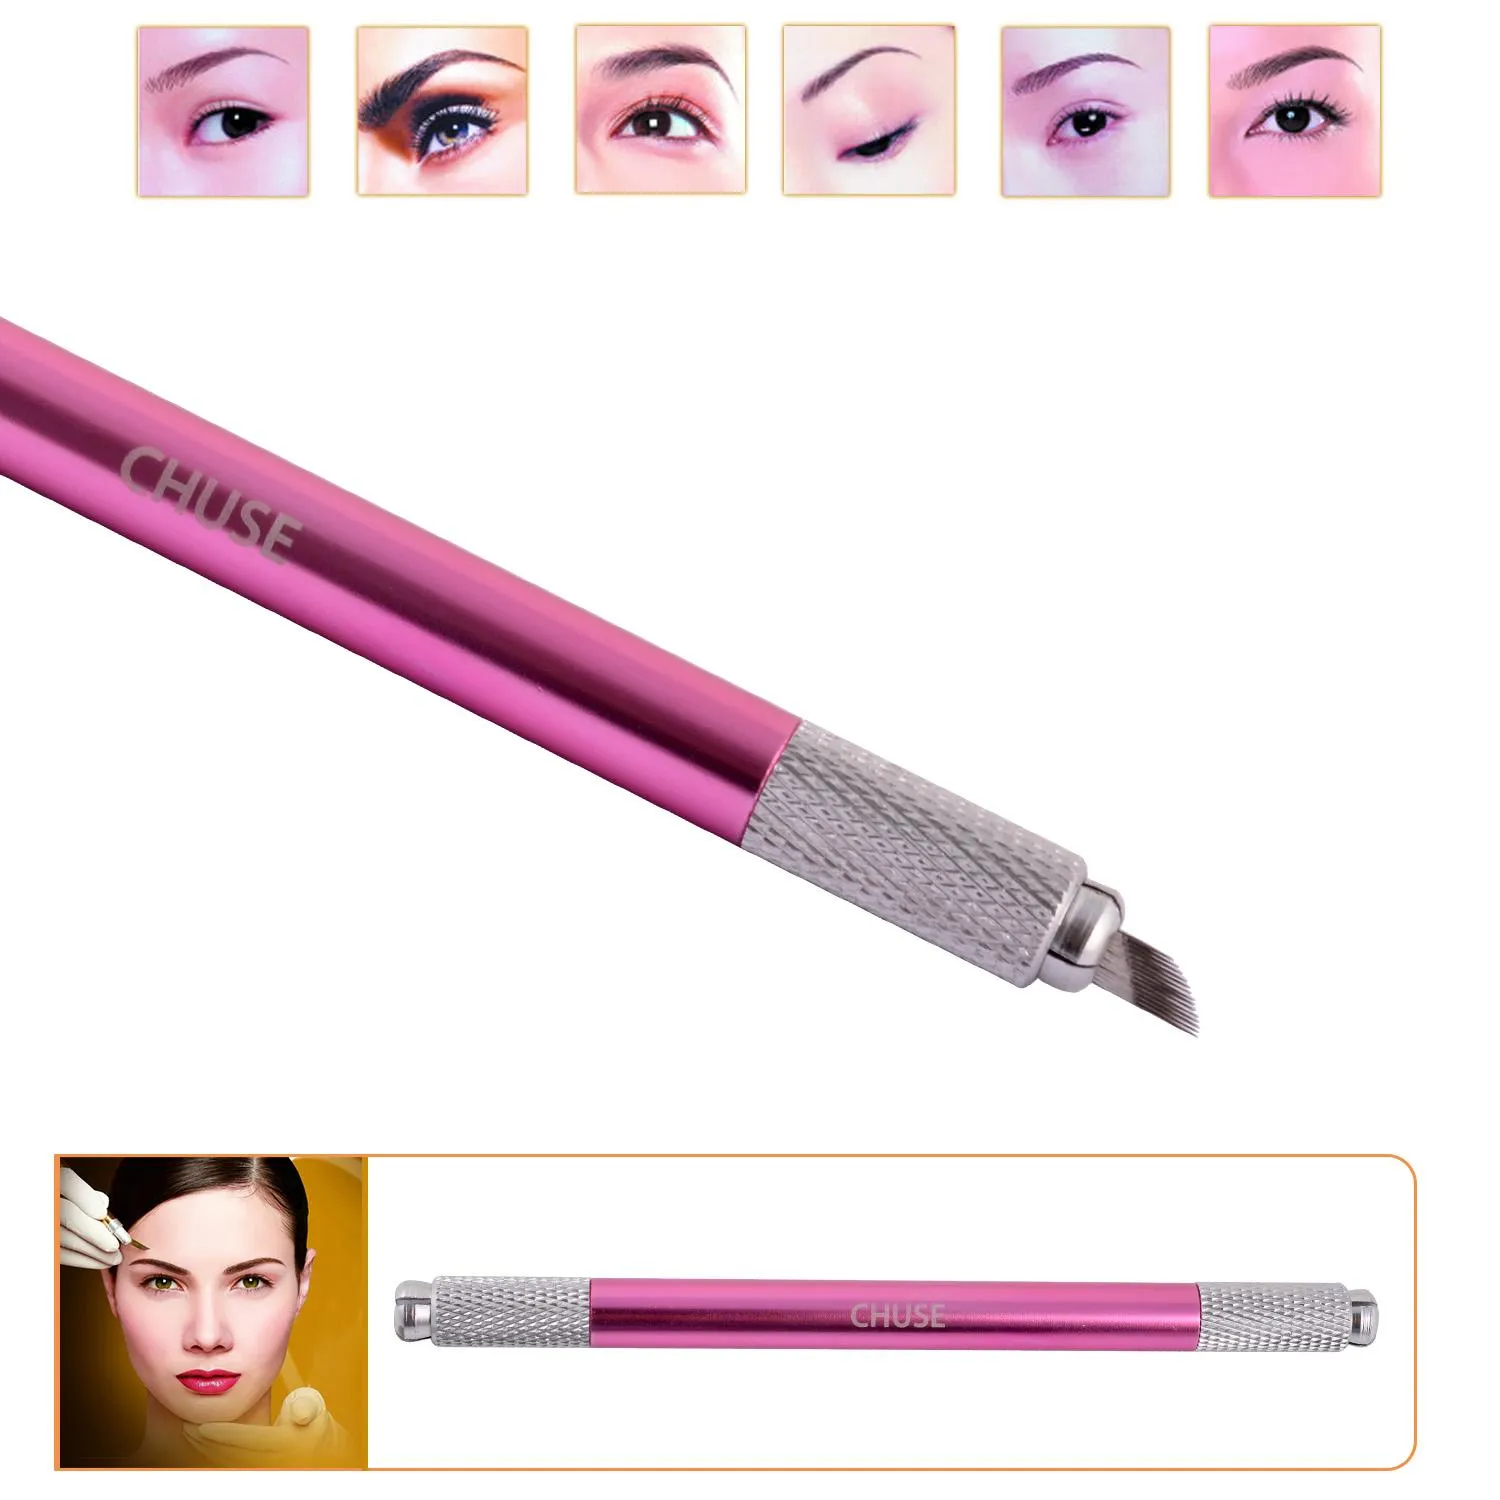 Chuse Manual Cosmetic Pen Pink Tattoo Tattoo眉毛マシンのための恒久的なメイク用の両方のヘッドが利用可能